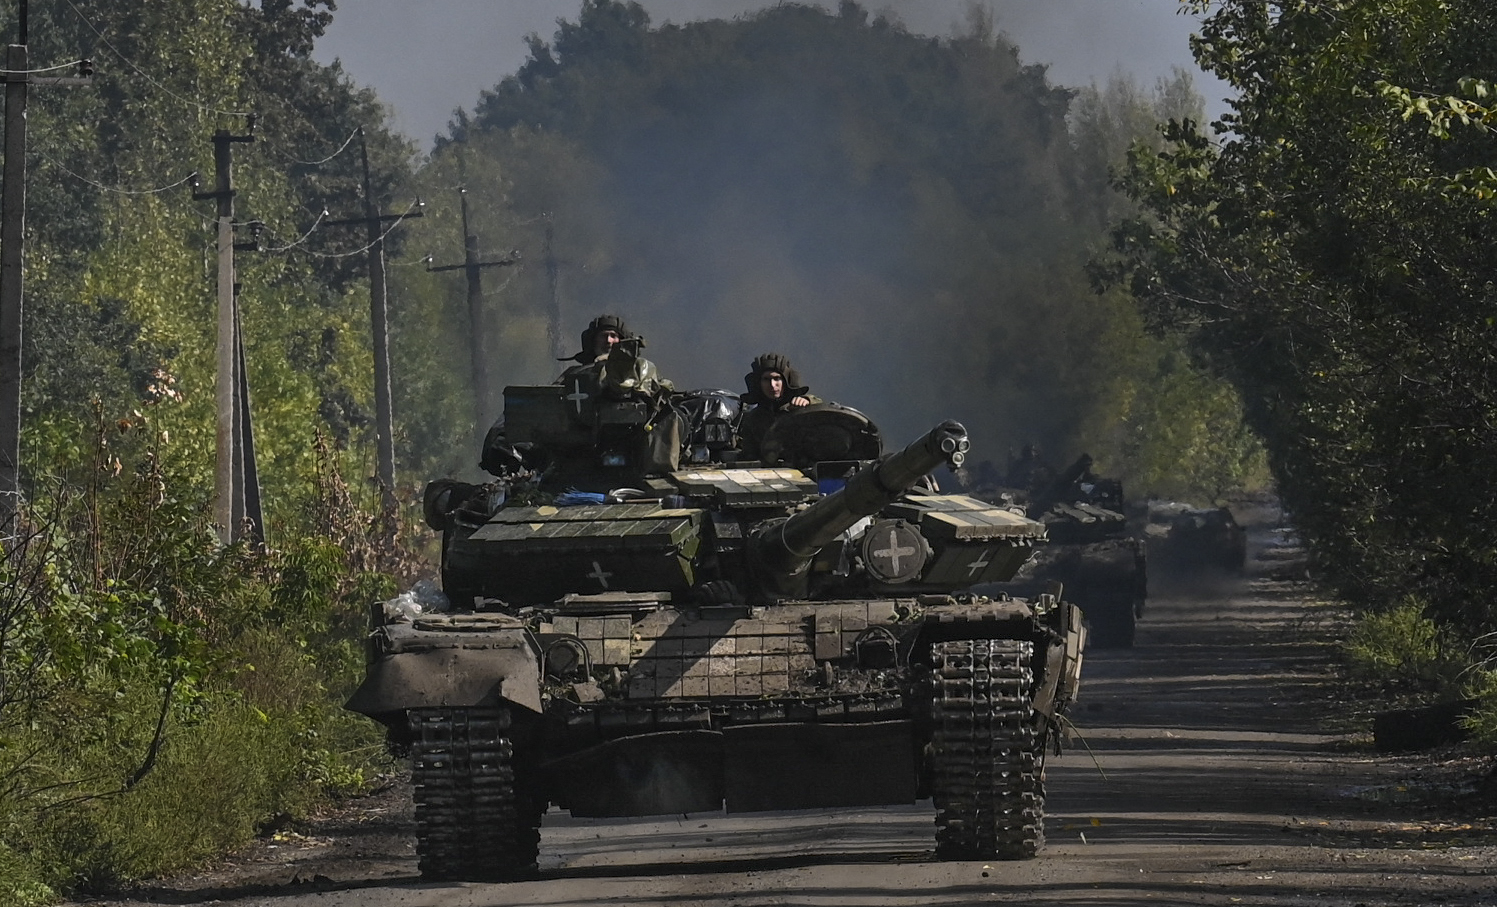 video:-ukraine-destroys-russia's-zoopark-1-radar-with-an-excalibur-projectile